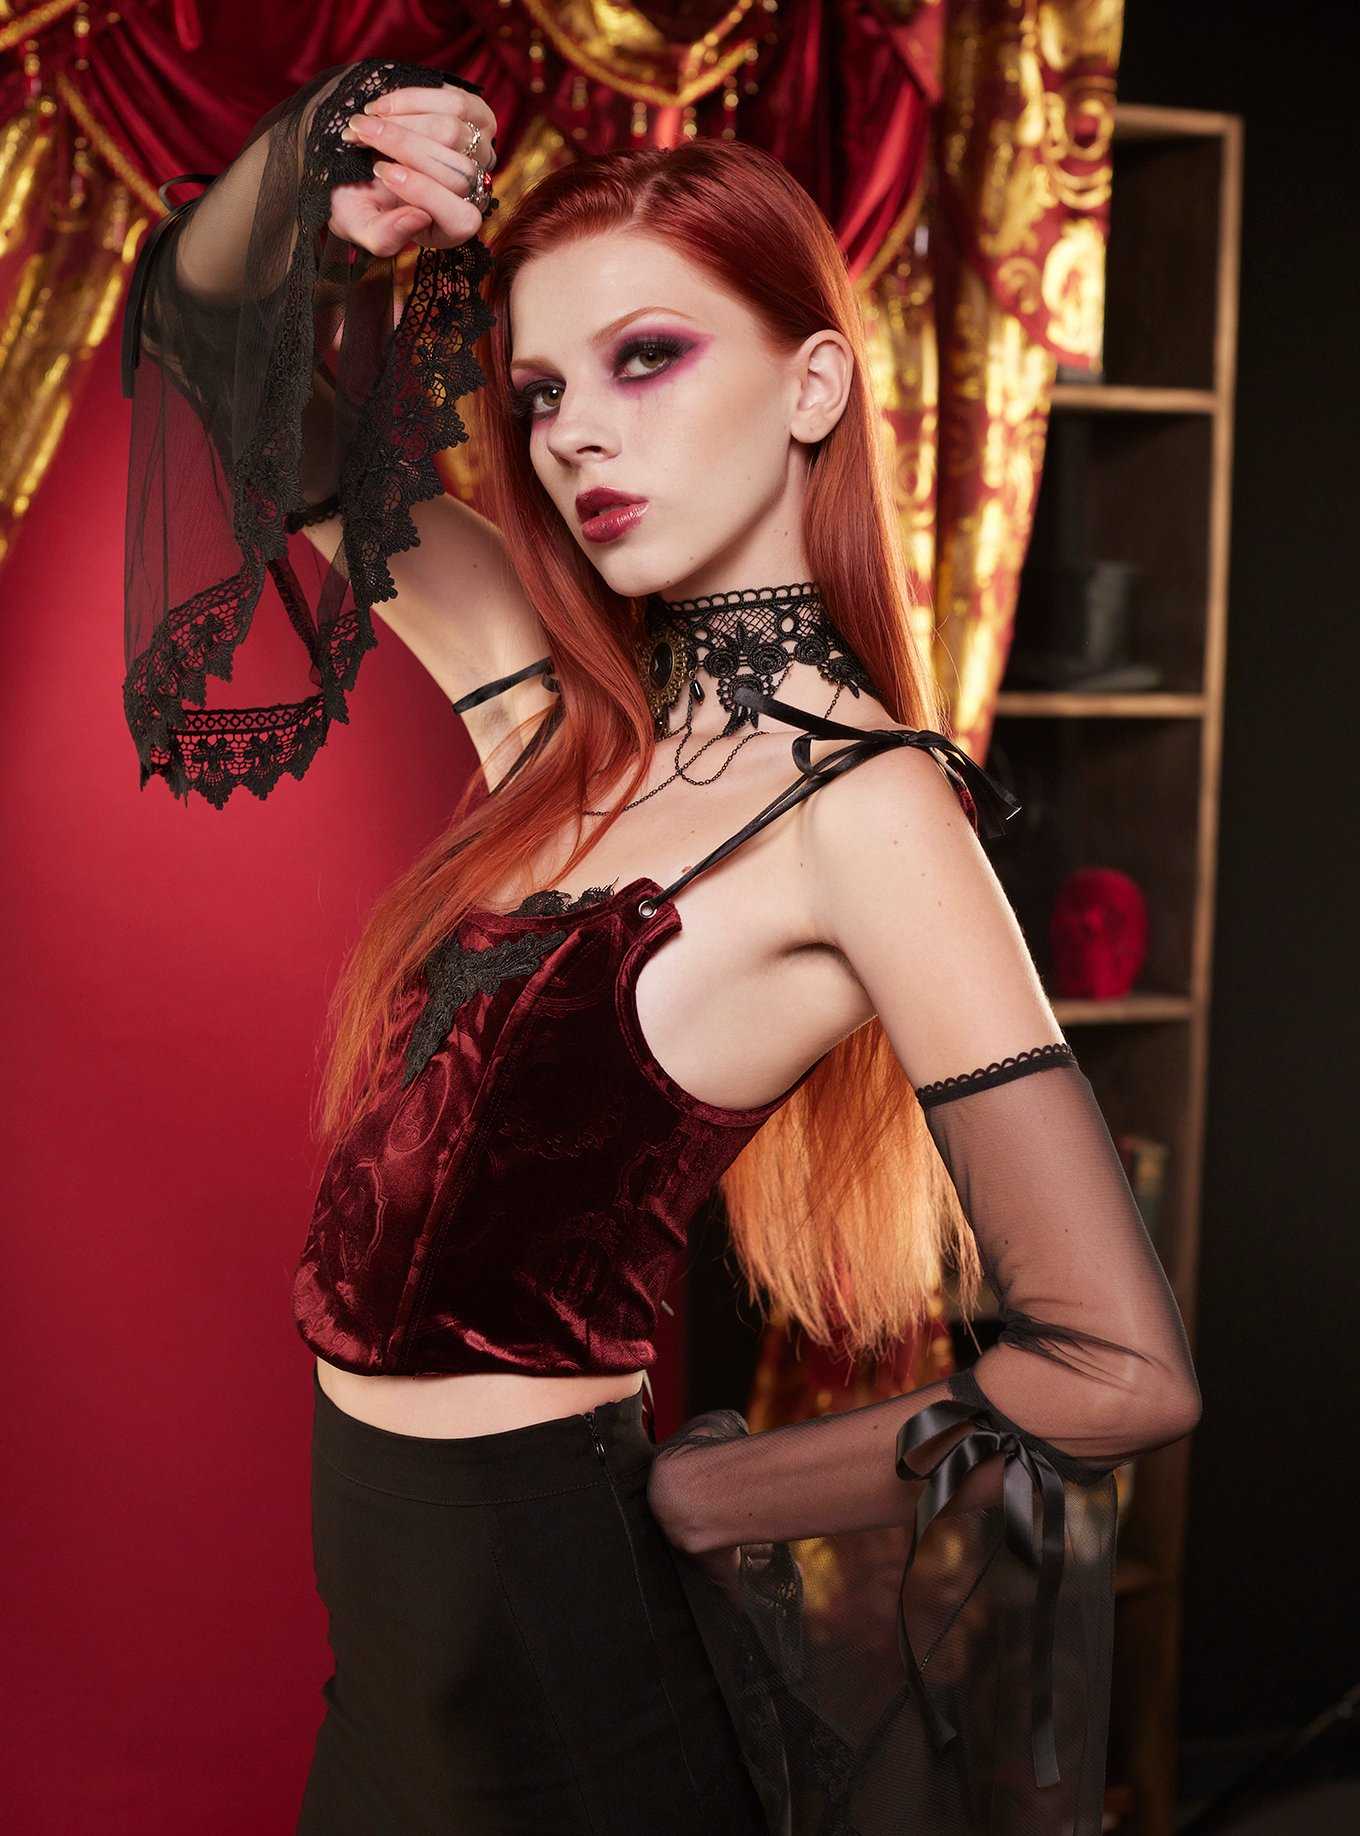 Vampiress - women's Gothic Corset Belt